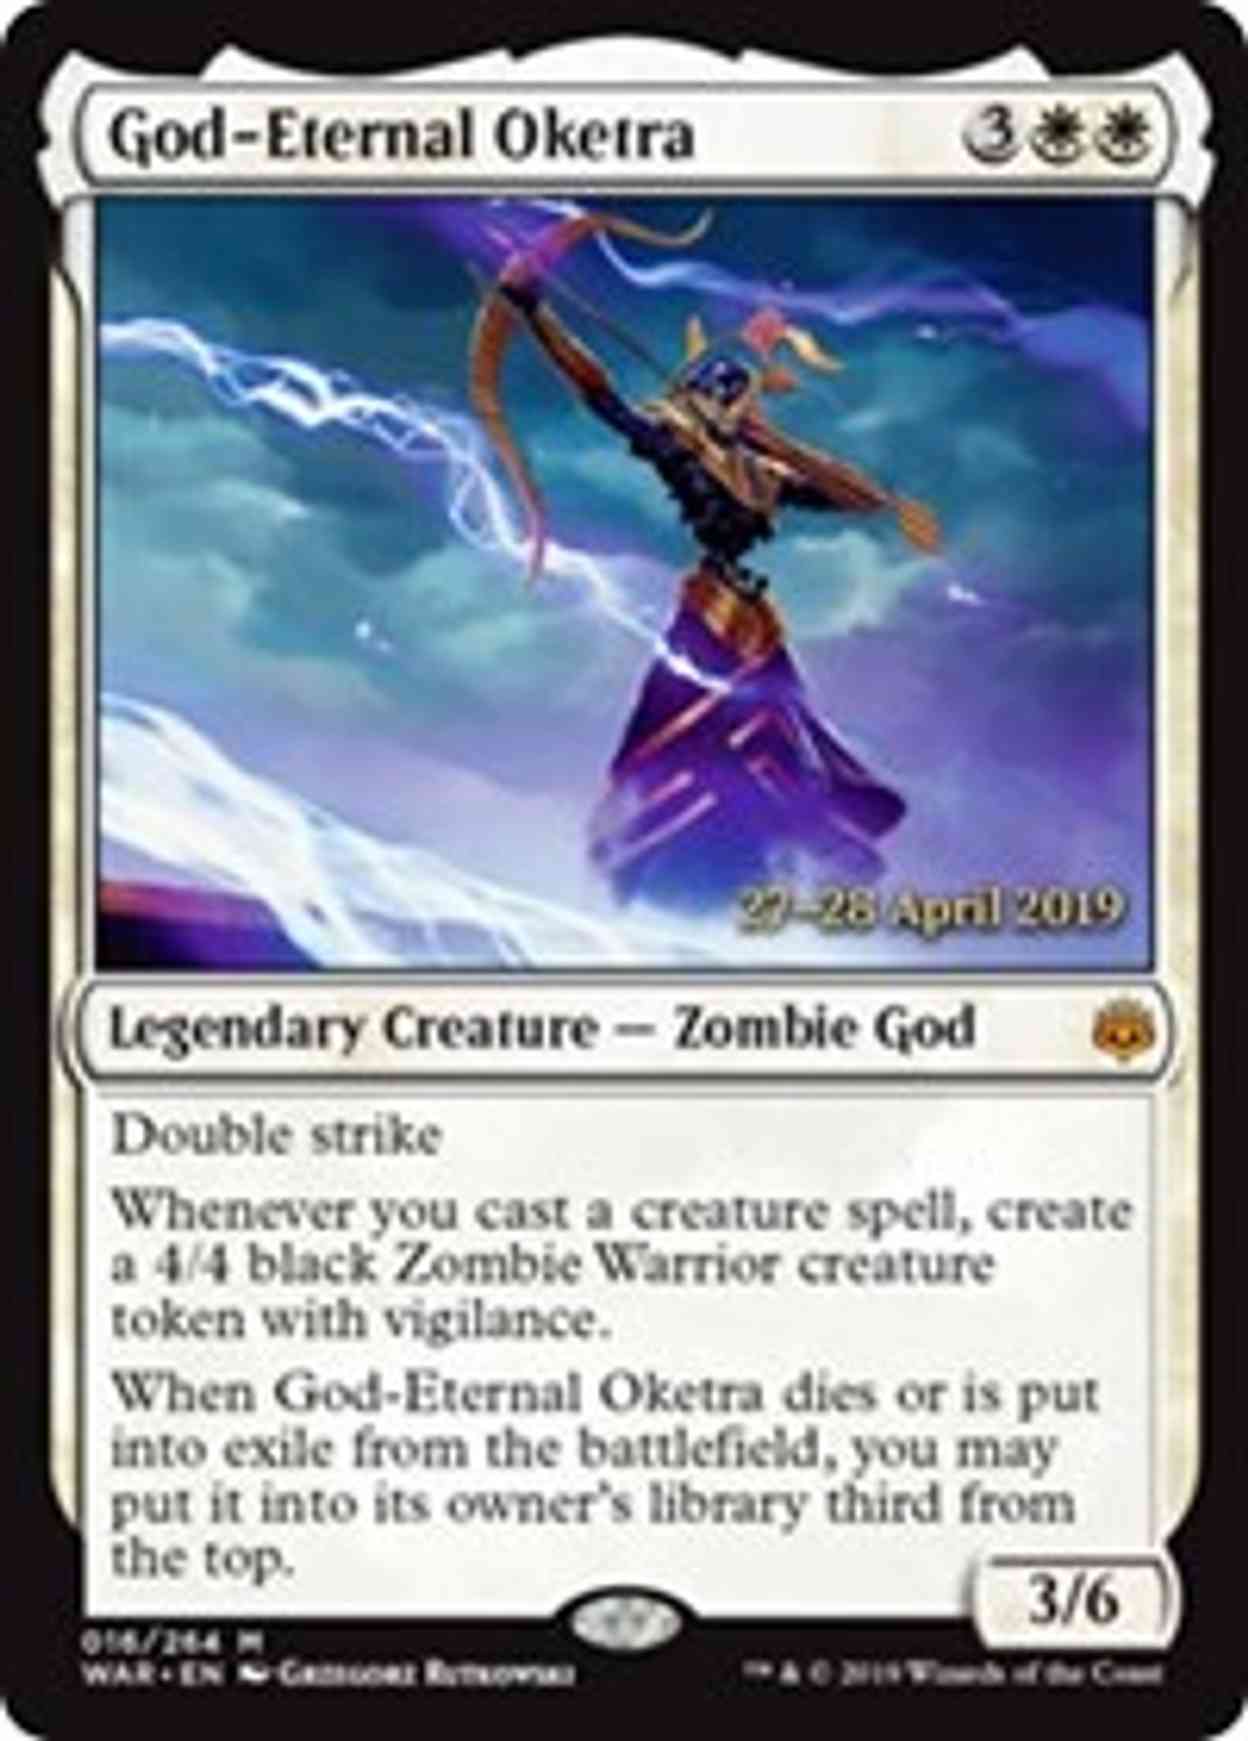 God-Eternal Oketra magic card front